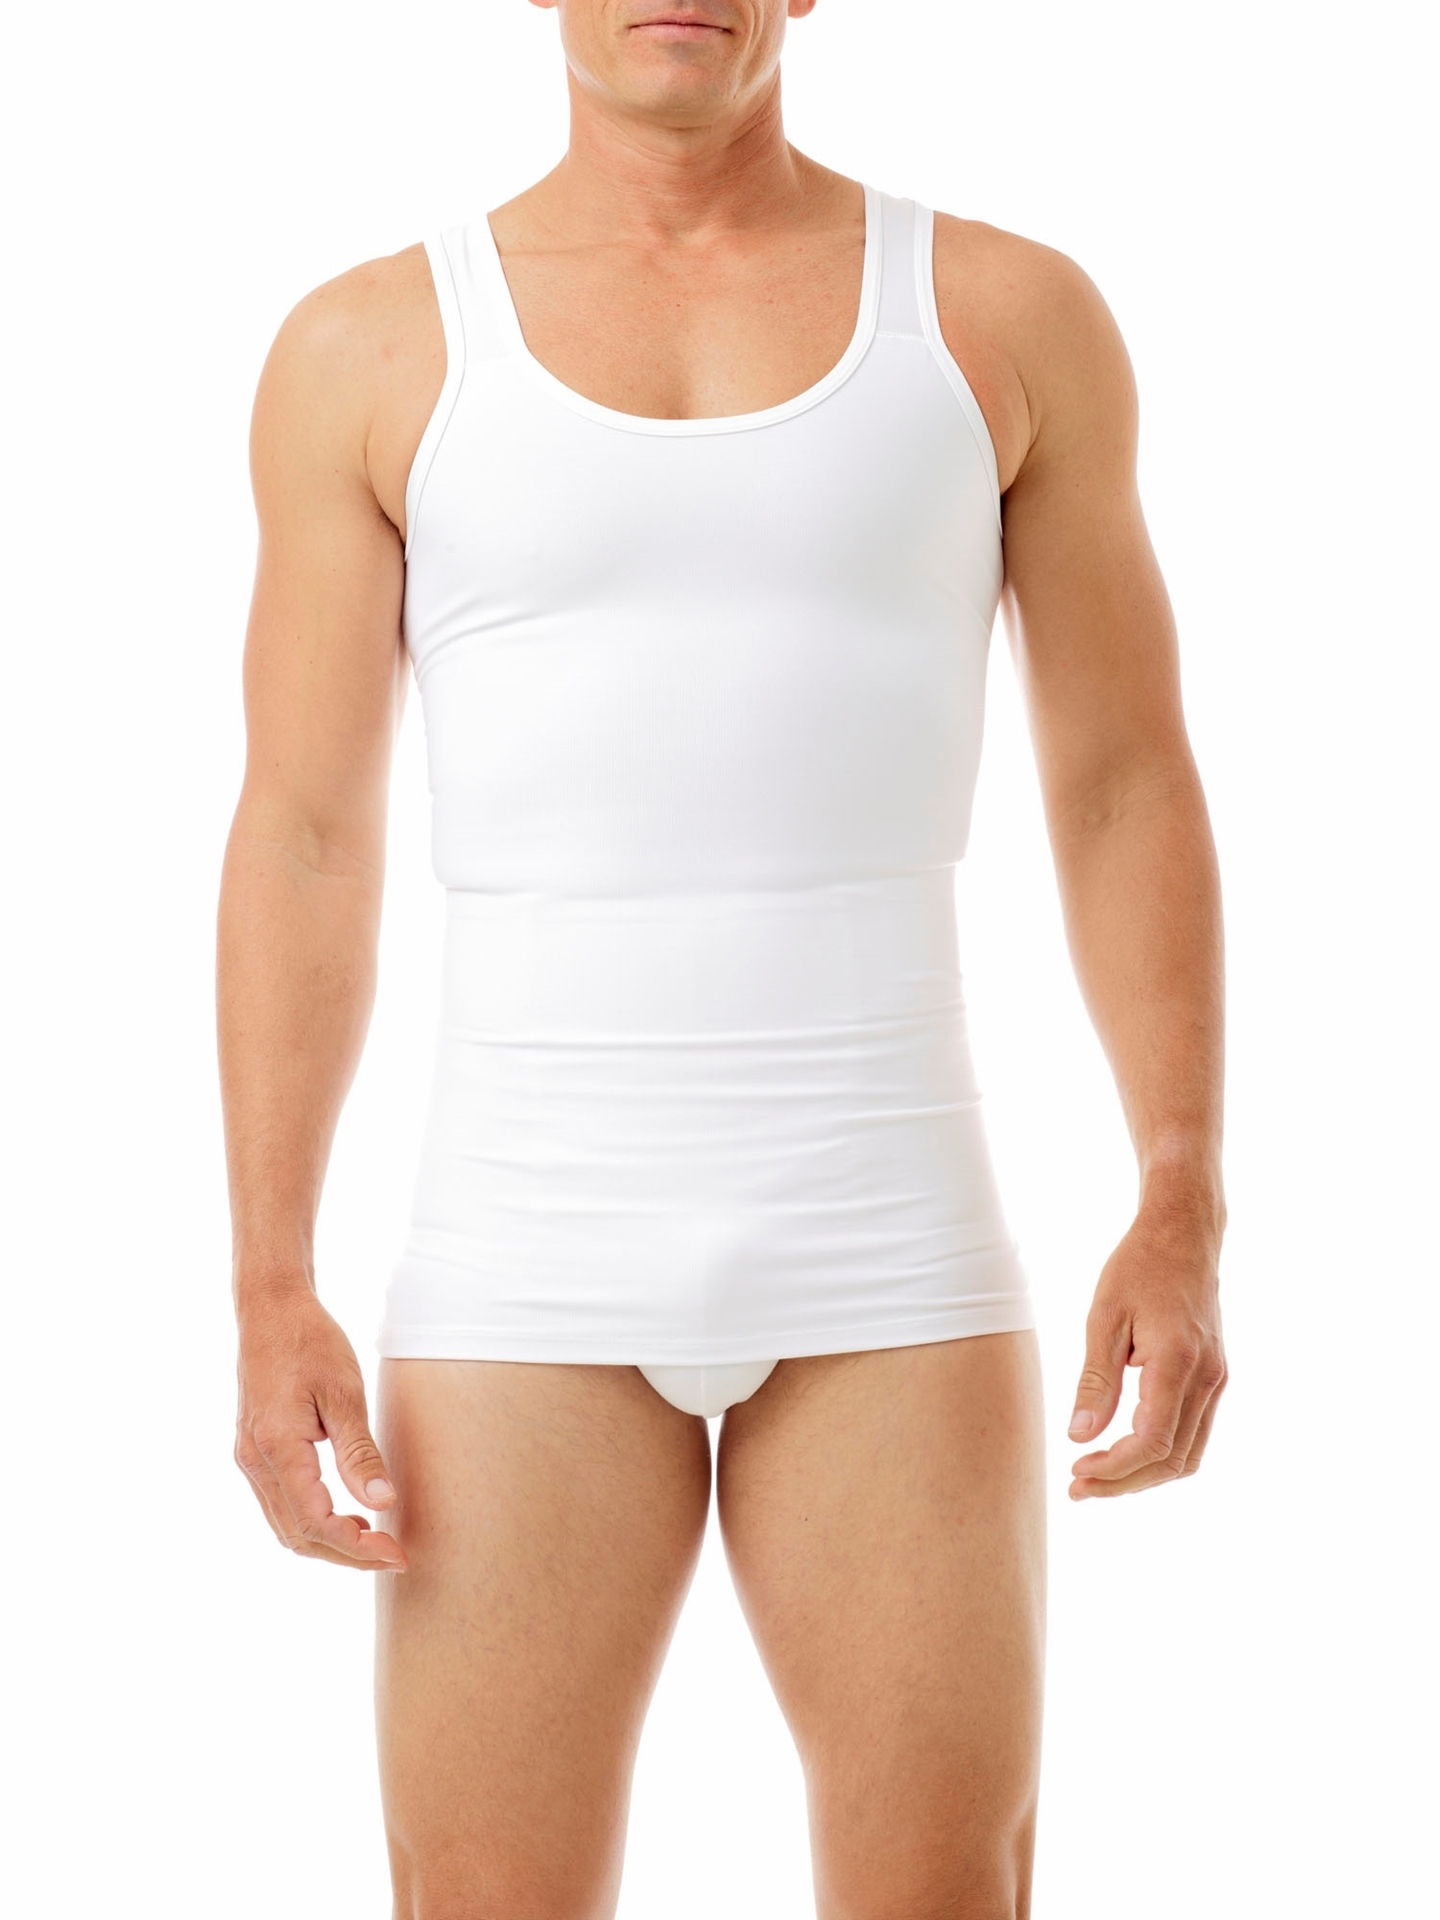 Body shaper underwear   - Women's and men's clothing